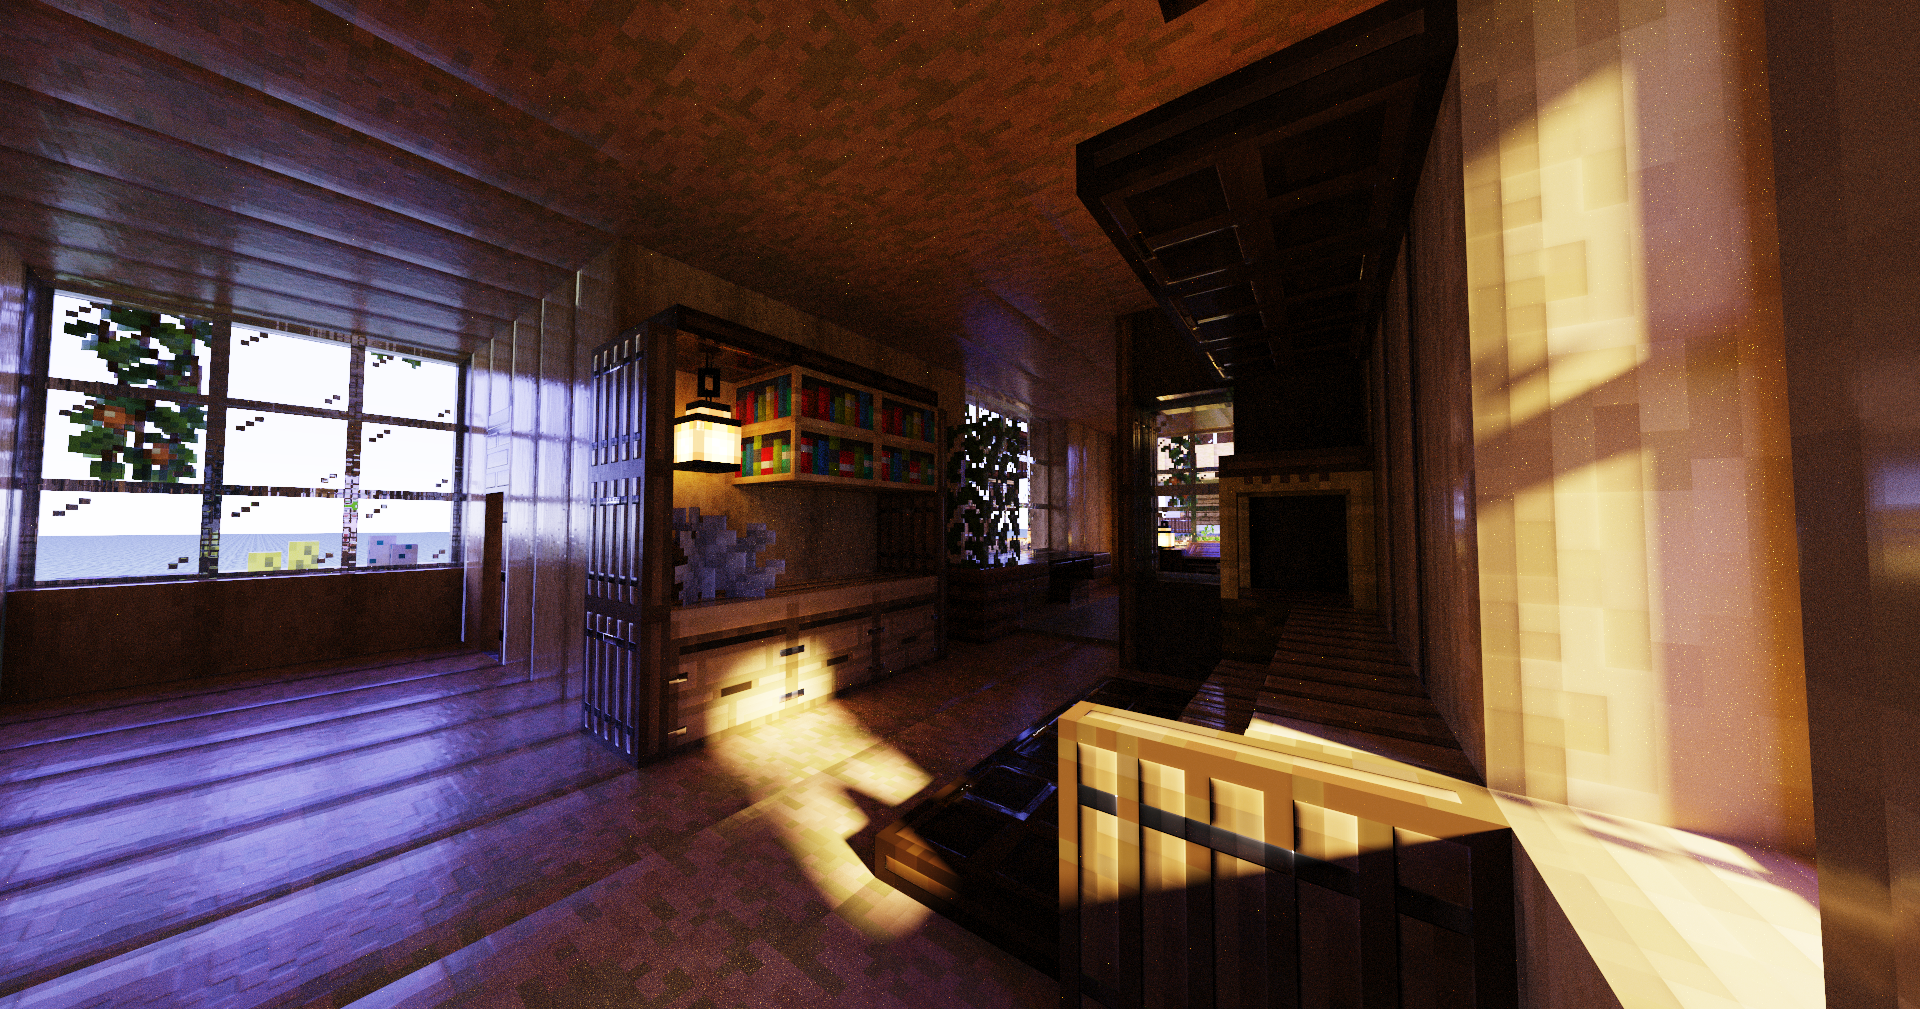 Minecraft CGi Shader Ray Tracing Nvidia RTX Video Games Video Game Art Interior Window Sunlight 1920x1009